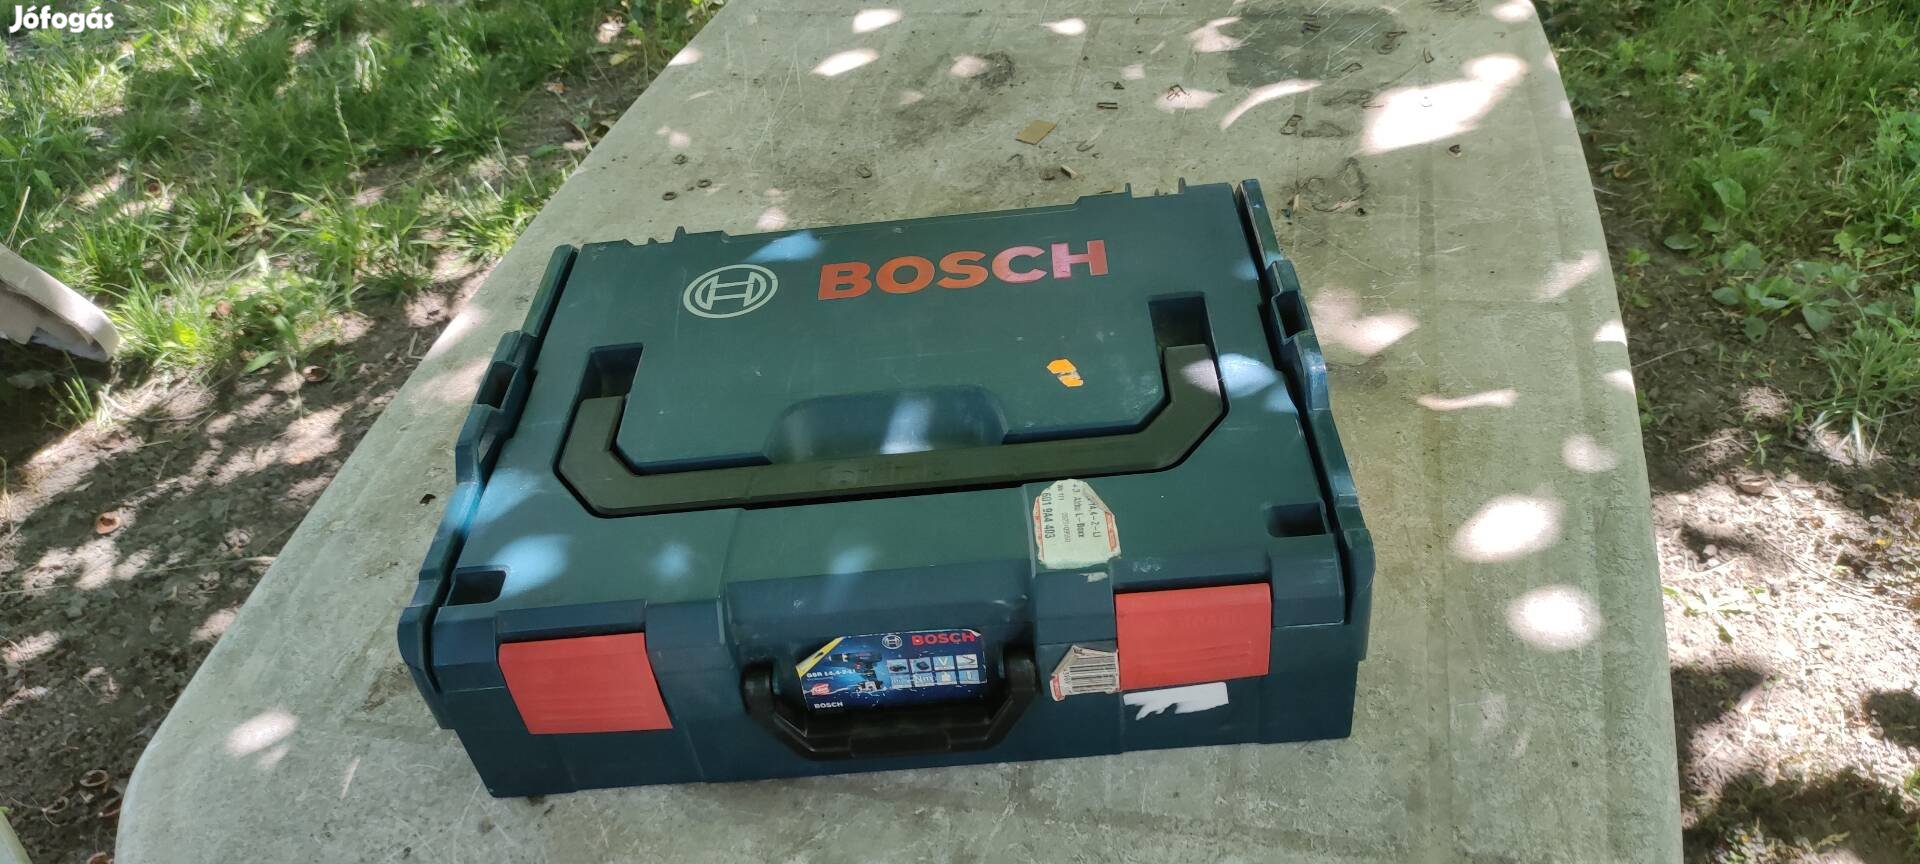 Bosch kofer eladó.